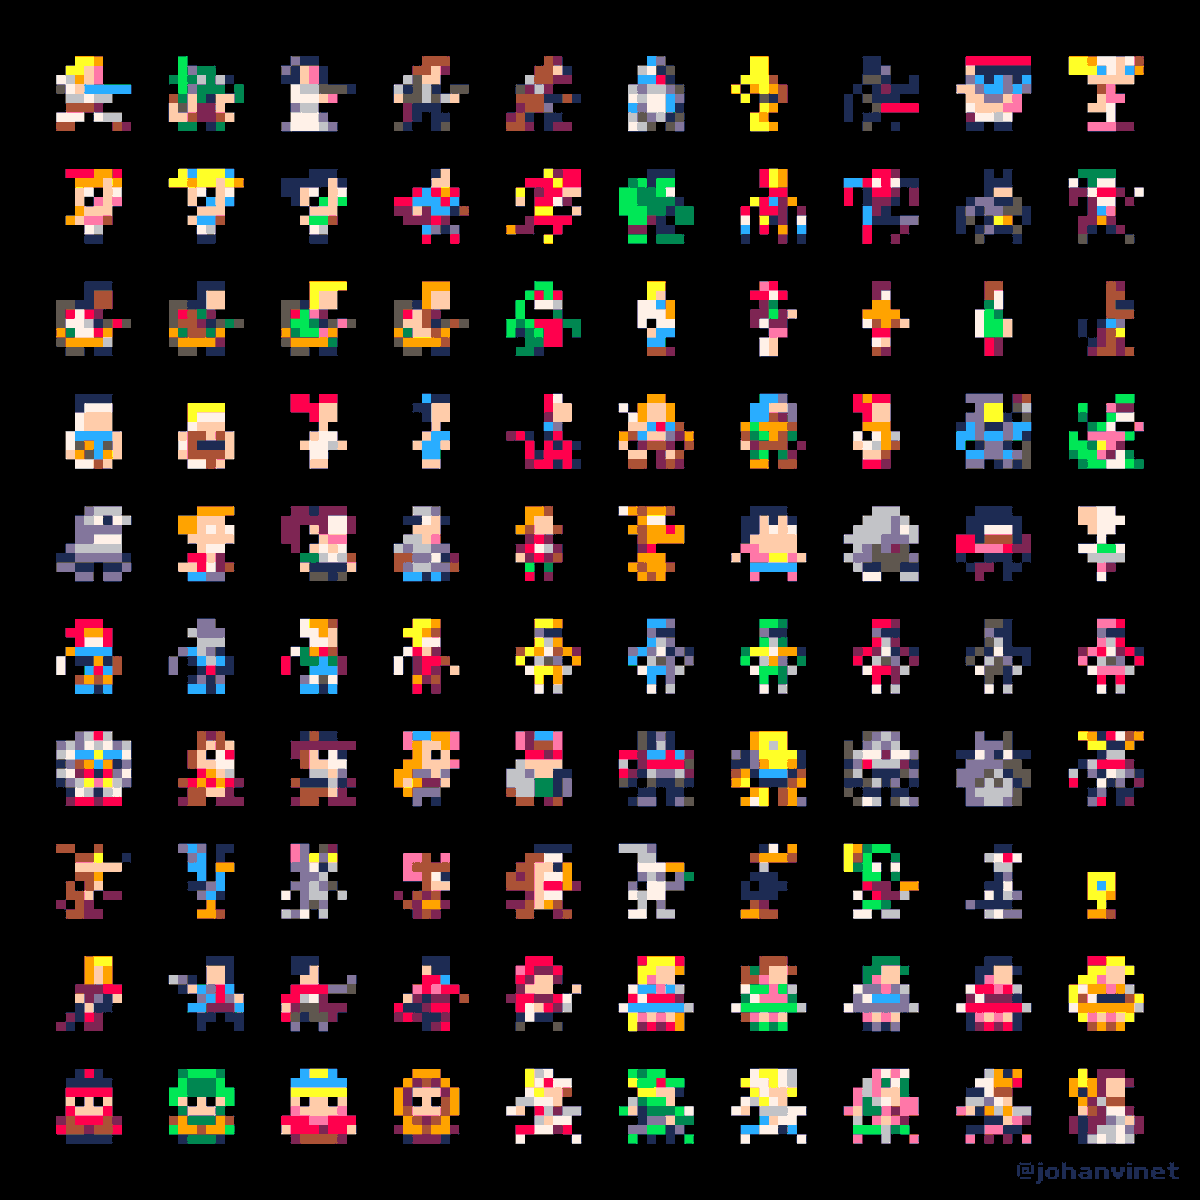 Hey folks! Here's my new set of 100 famous characters, 8x8 pixels, using a 16 colors palette! #pixelart  #dotpic  #ドット絵  #pico8  #8bit